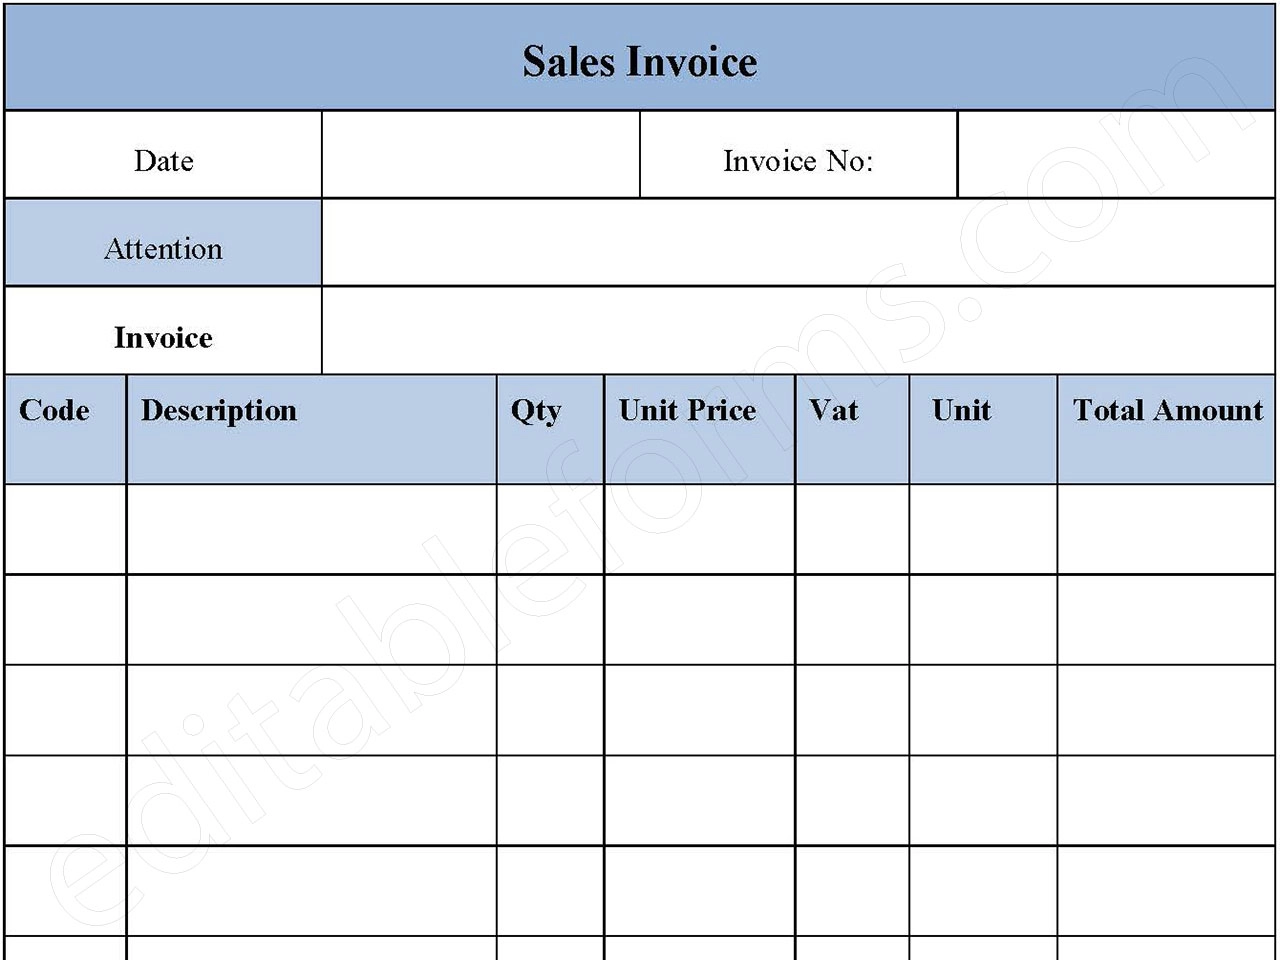 Sample Sales Invoice Fillable PDF Template